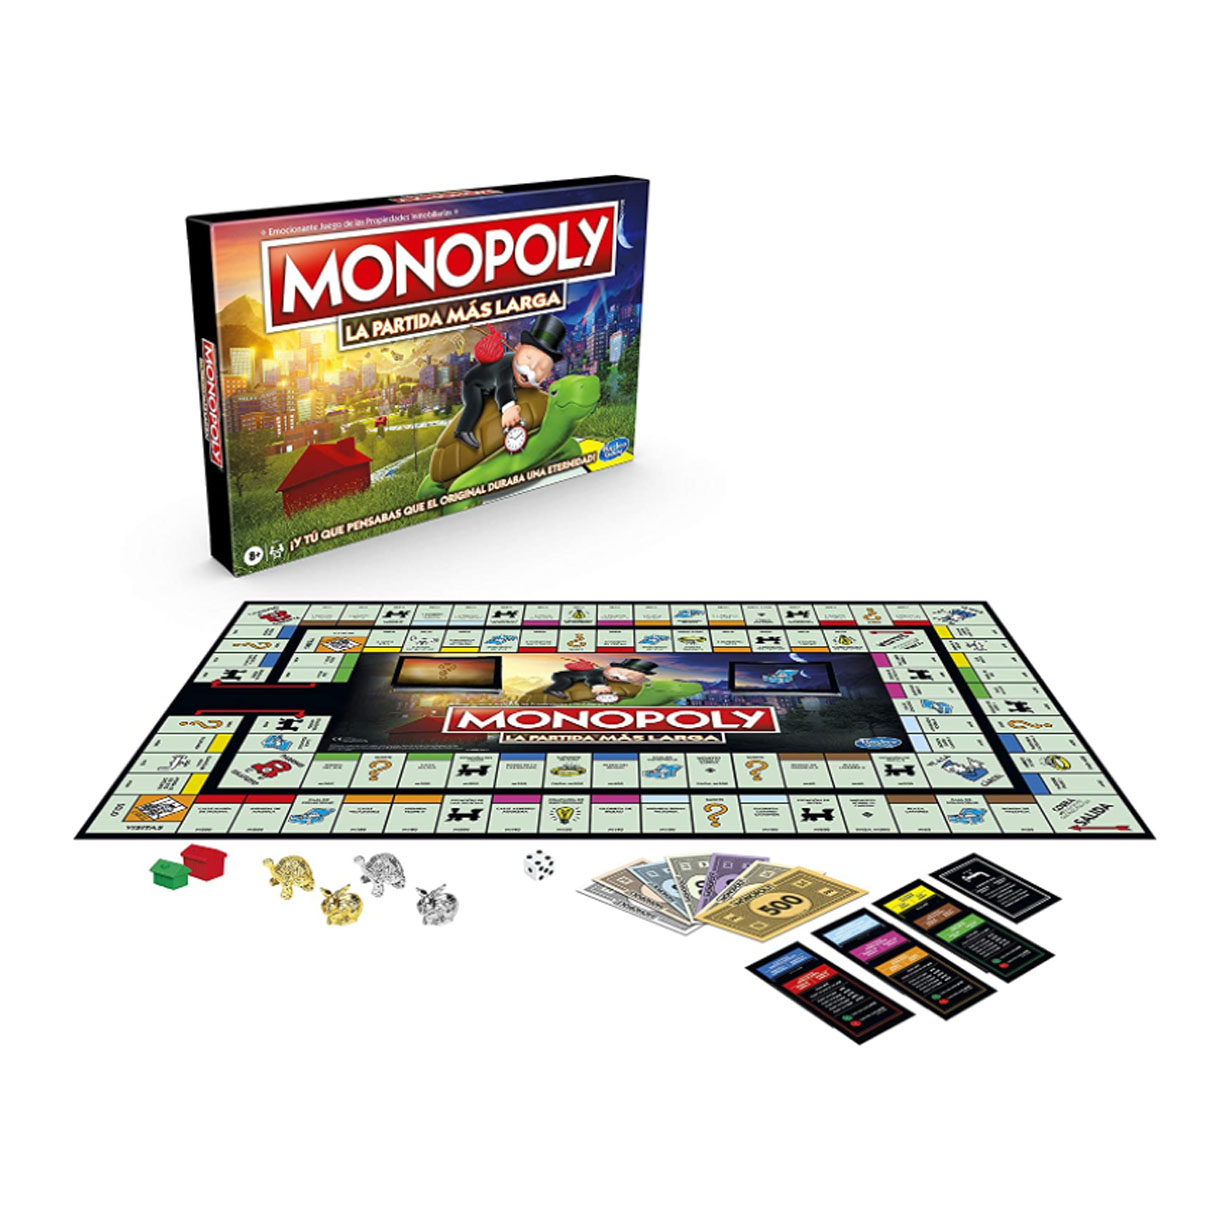 monopoly la partida mas larga ( hi-080123)
